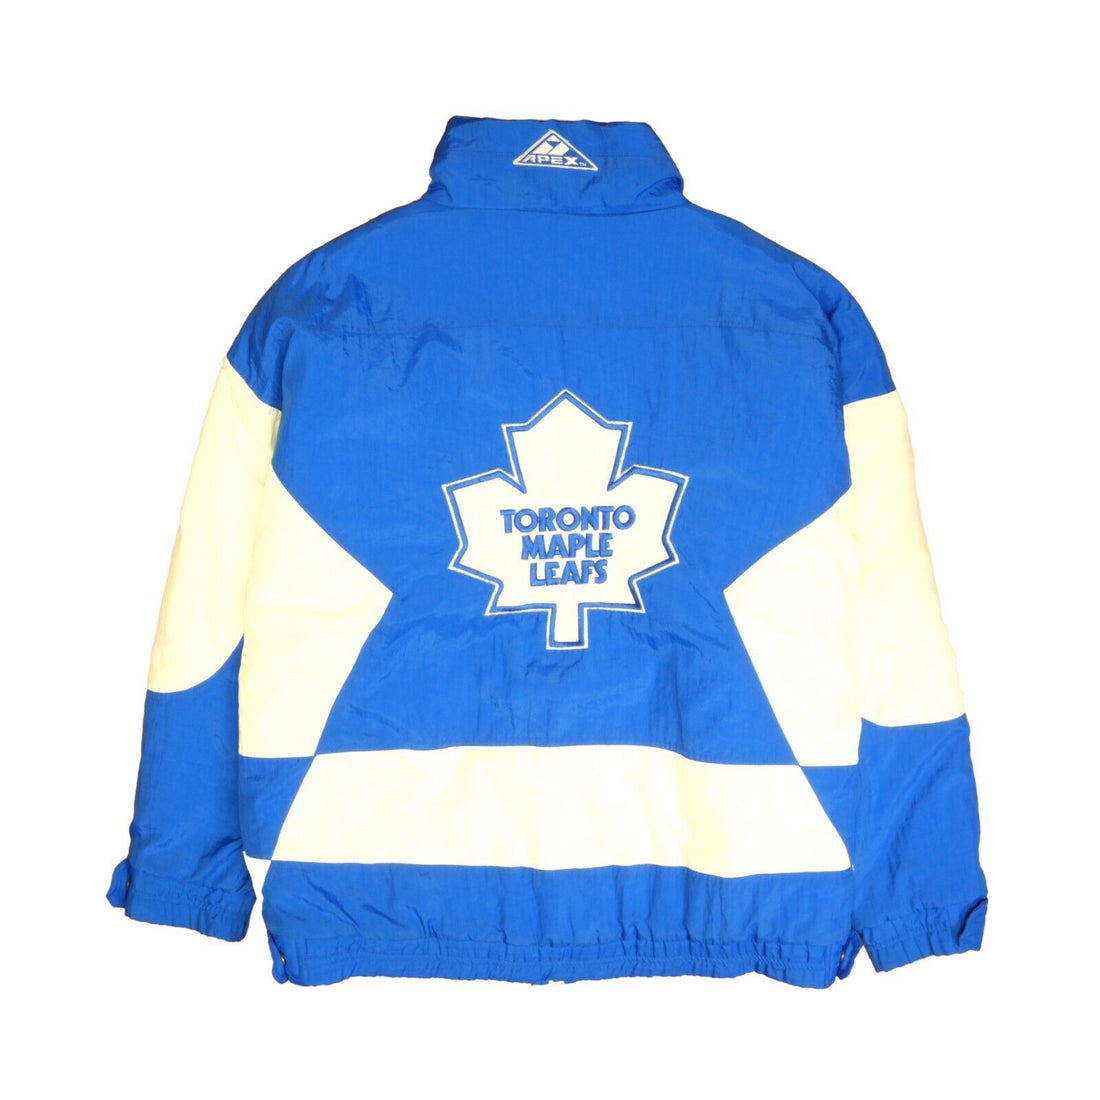 JH Design Toronto Maple Leafs Blue Bomber Jacket, Men's, Medium